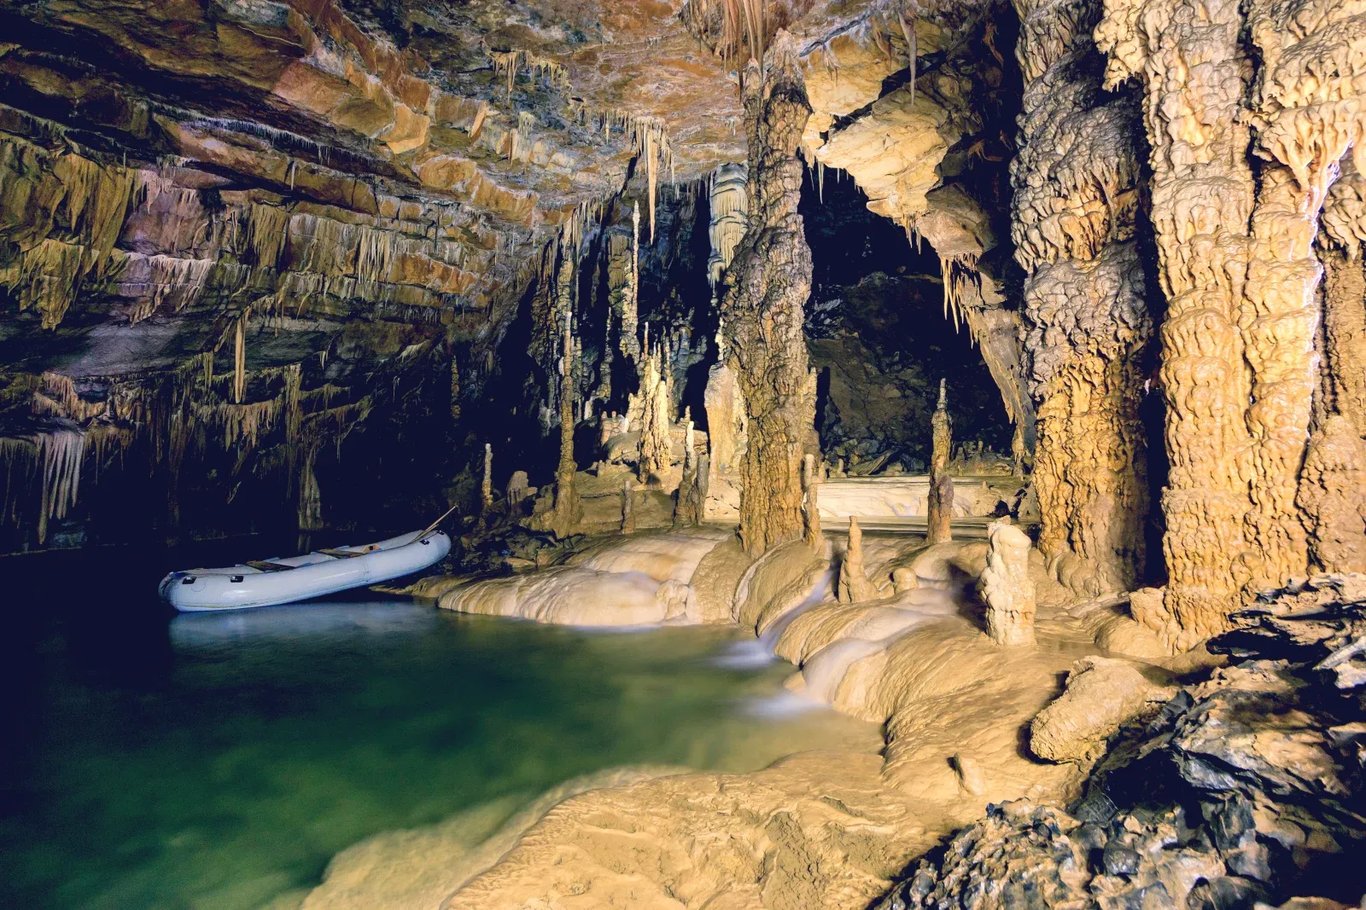 Krizna Cave, Slovenia - The World's Longest Spring Cave